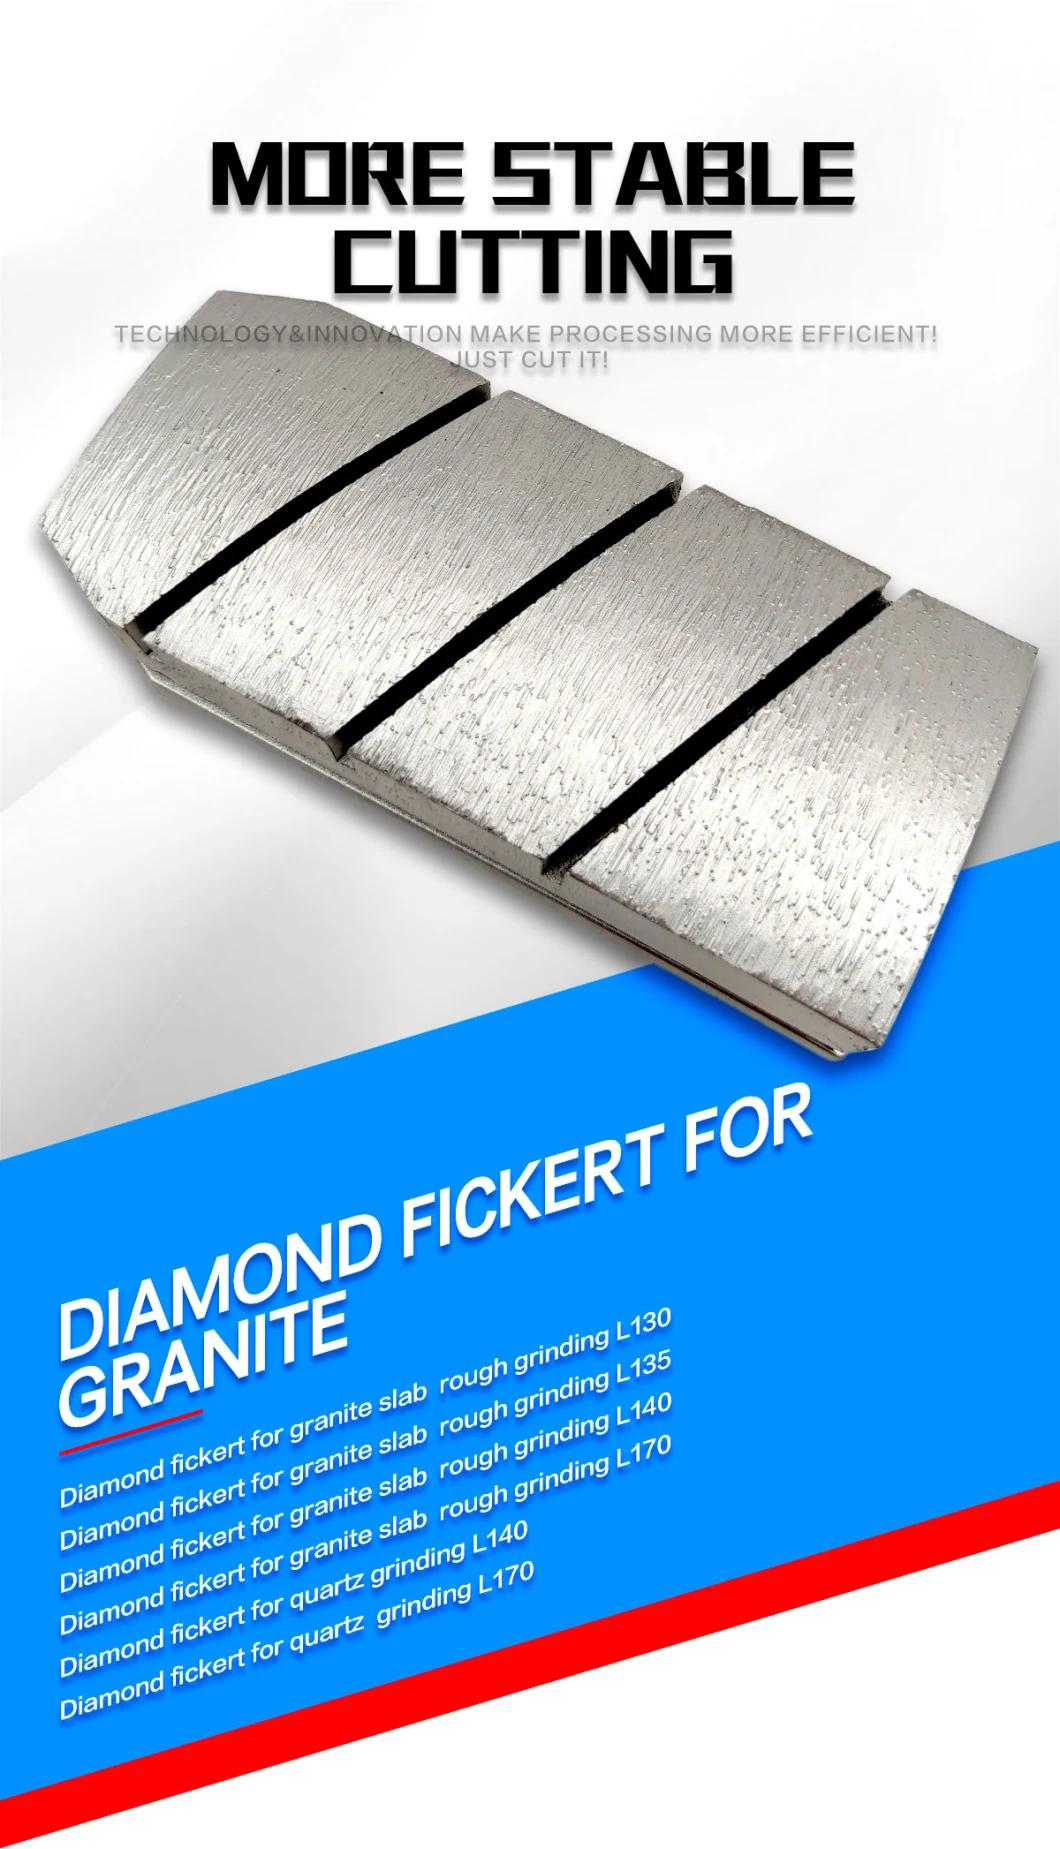 Diamond Fickert for Granite Grinding Metal and Abrasive Resin Fickert